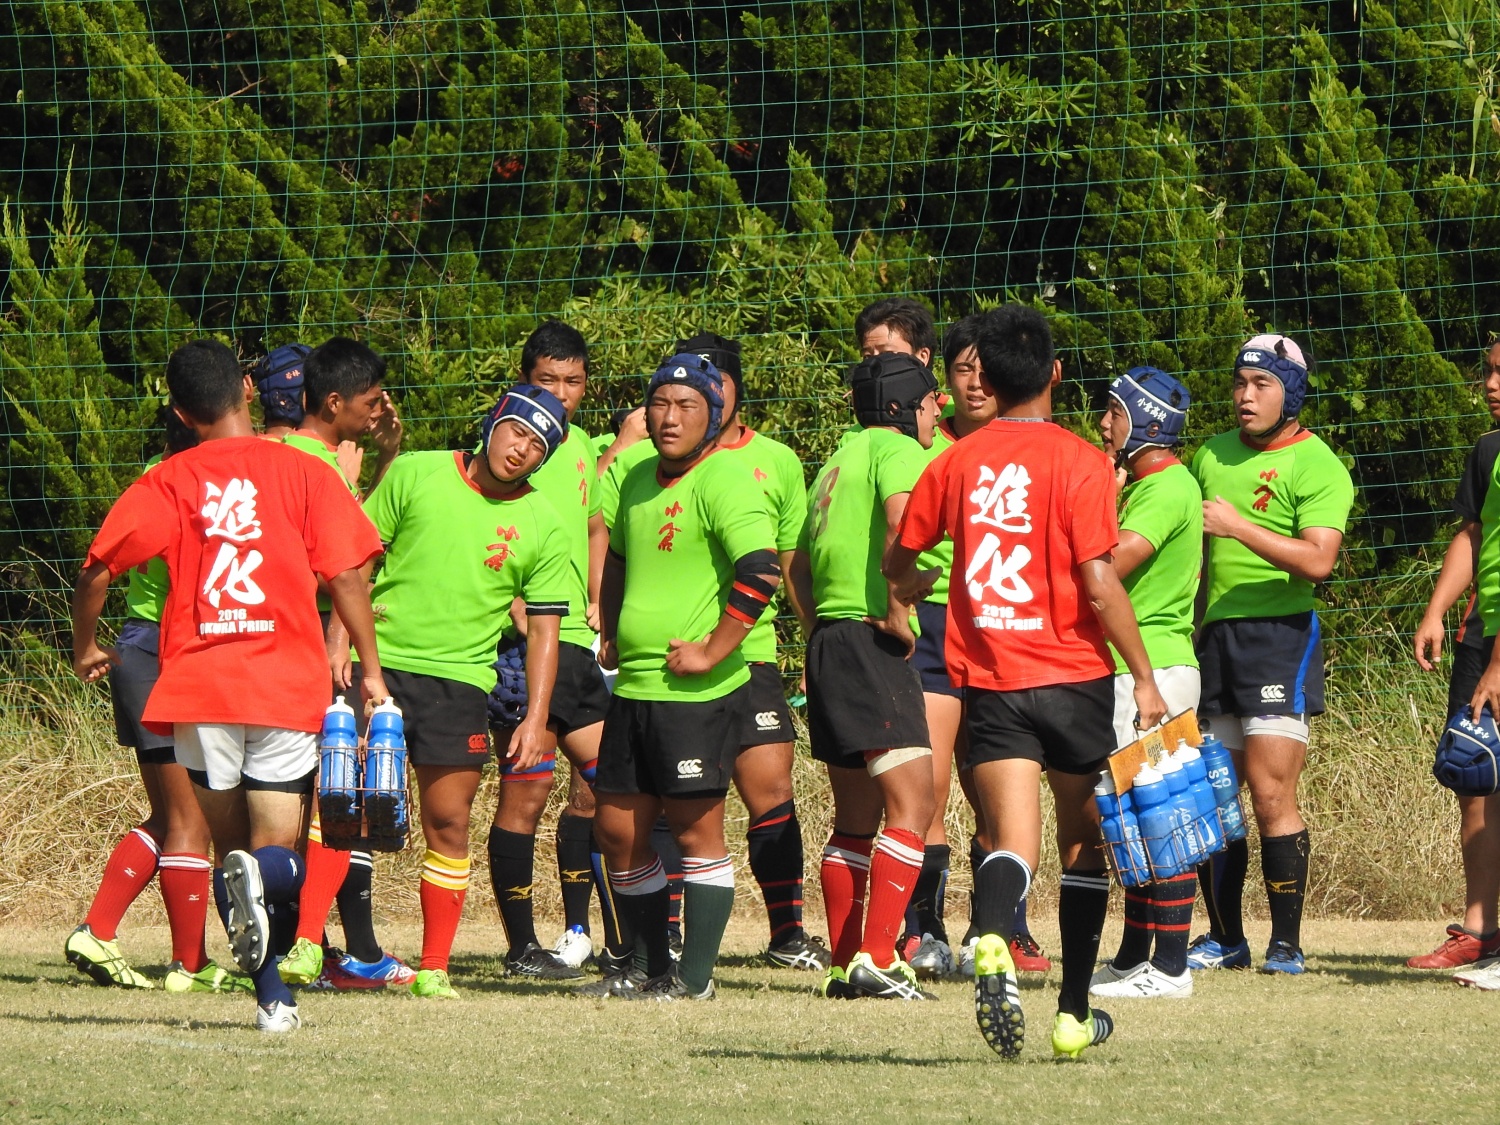 http://kokura-rugby.sakura.ne.jp/DSCN7513_xlarge.JPG